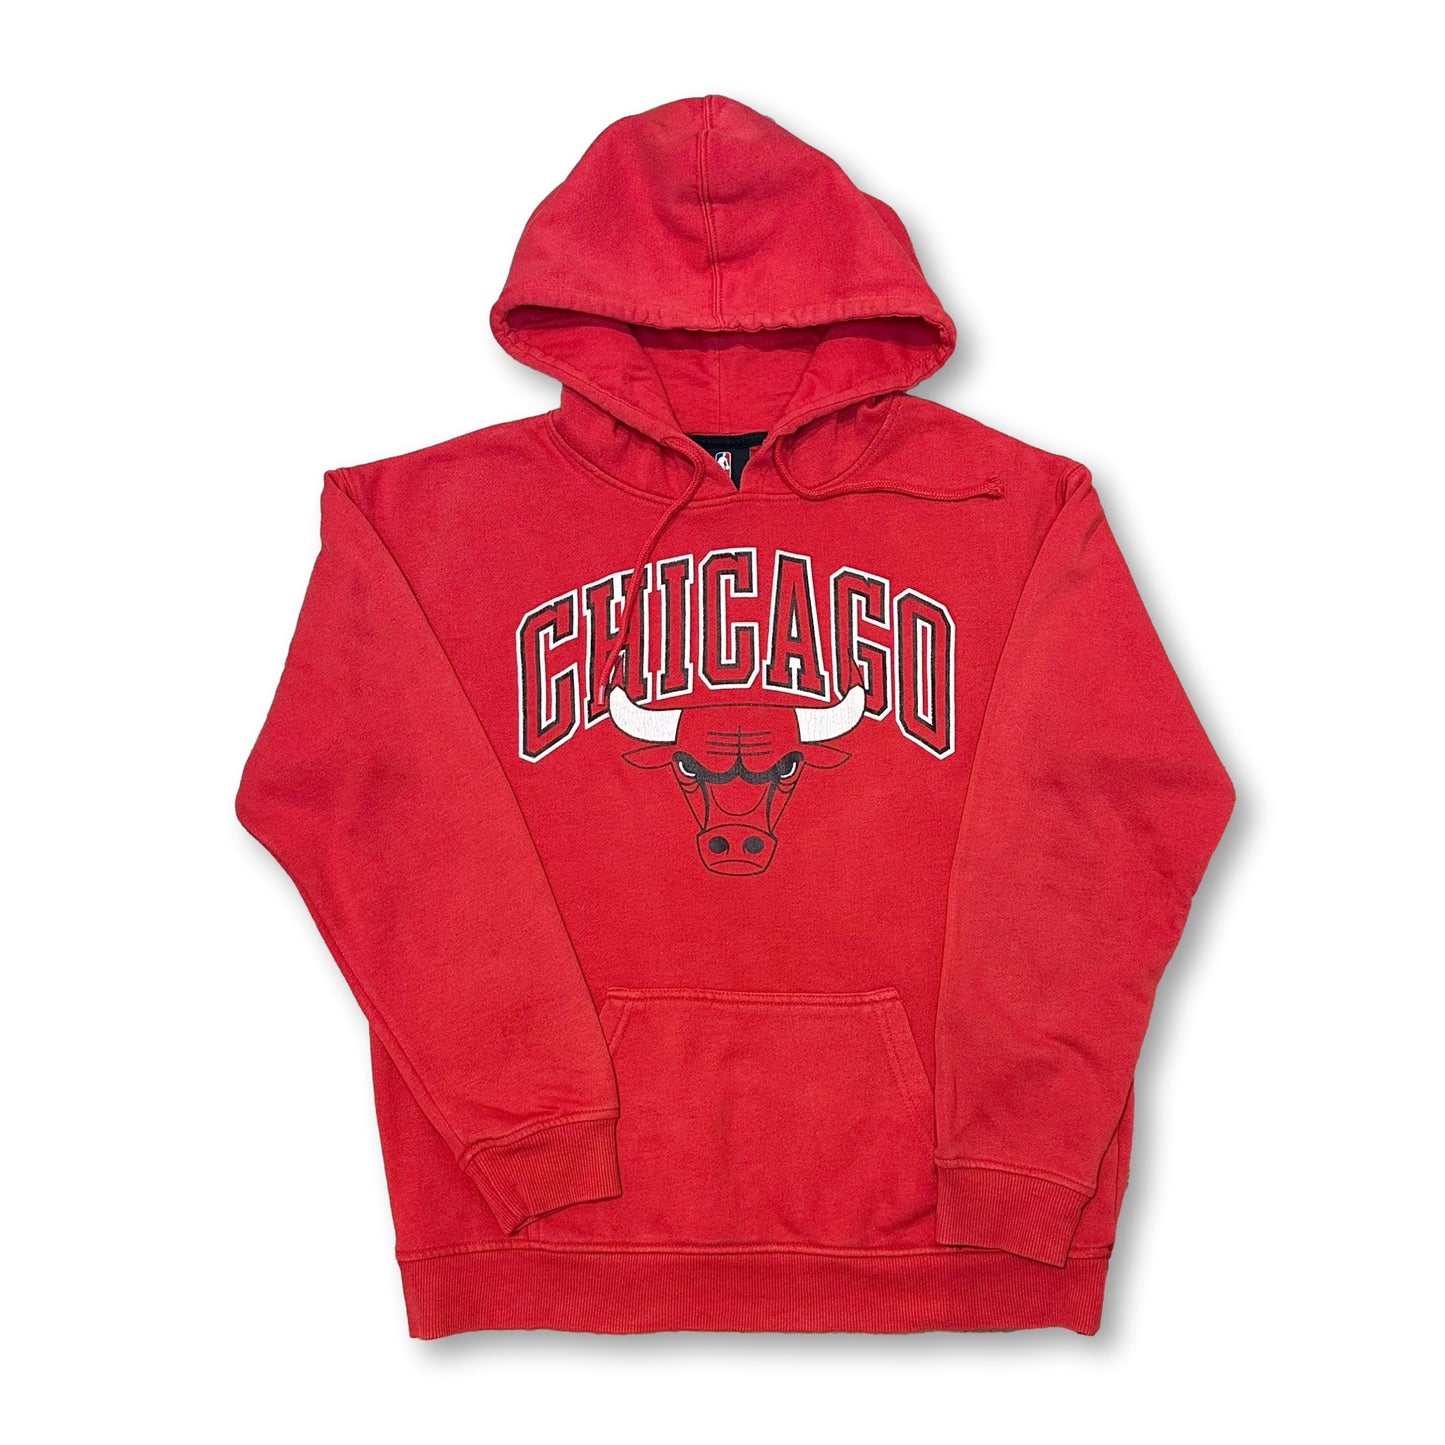 Reloved Chicago Bulls Hoodie